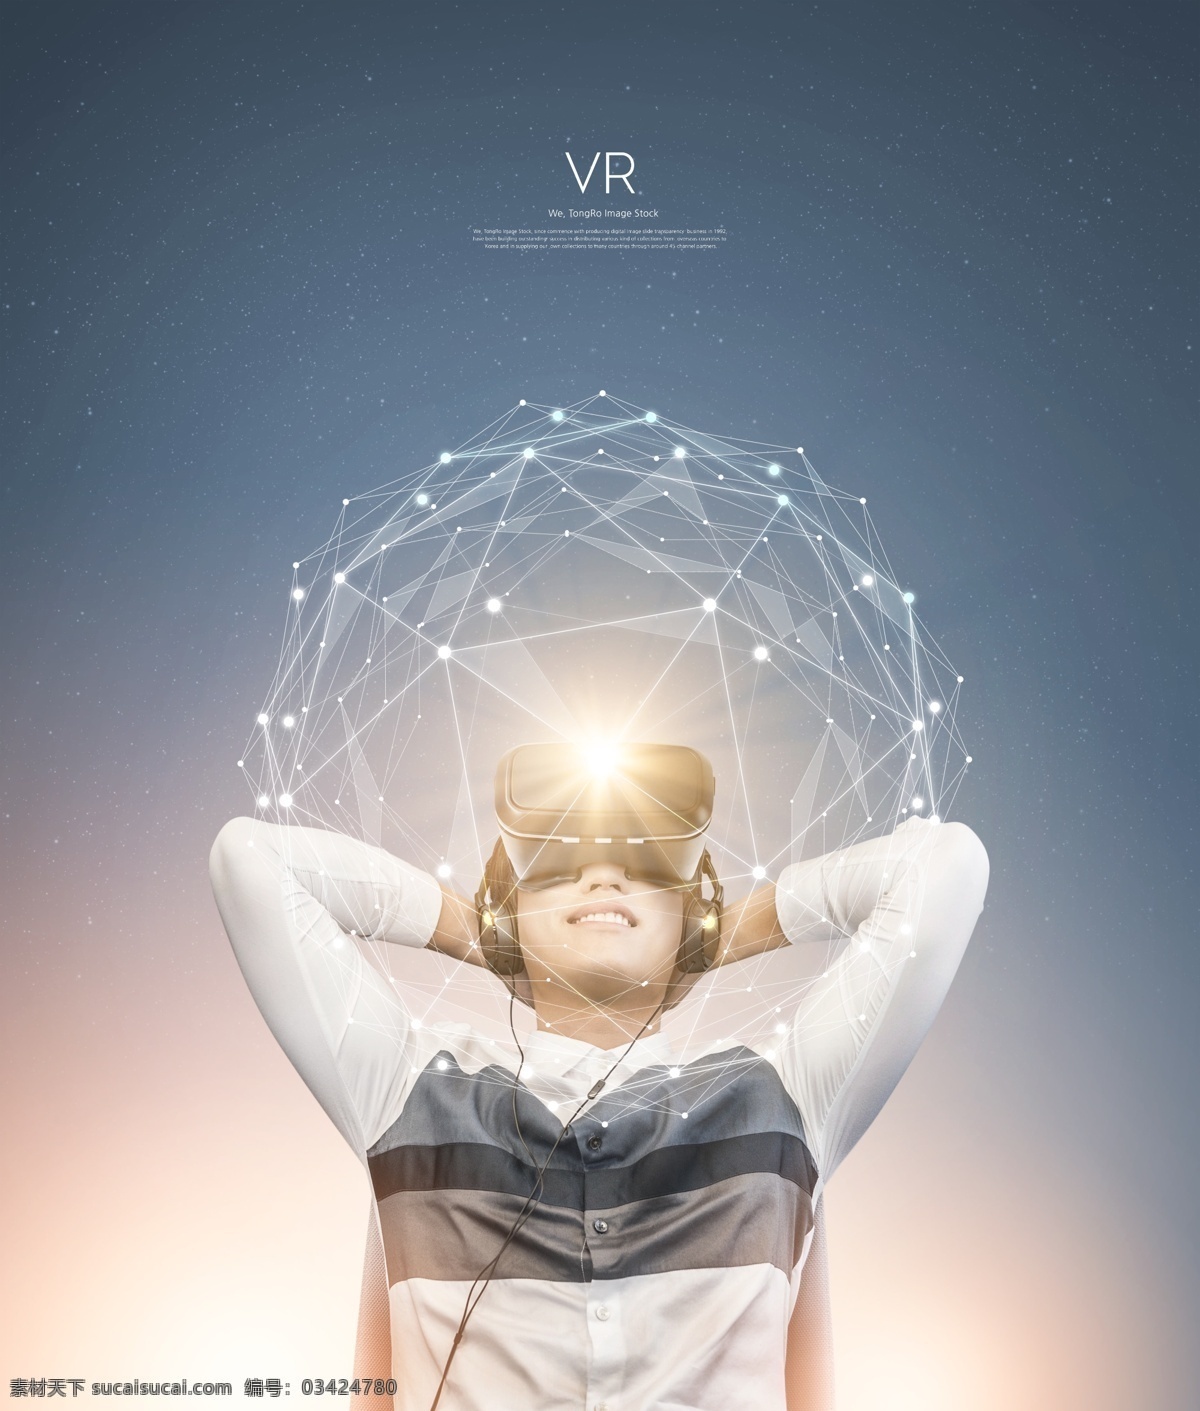 vr 科技 创意设计 vr眼镜 体验 科技感 虚拟现实 未来 生活 交互 游戏 合成海报 科技发展 创意 大气 现代科技